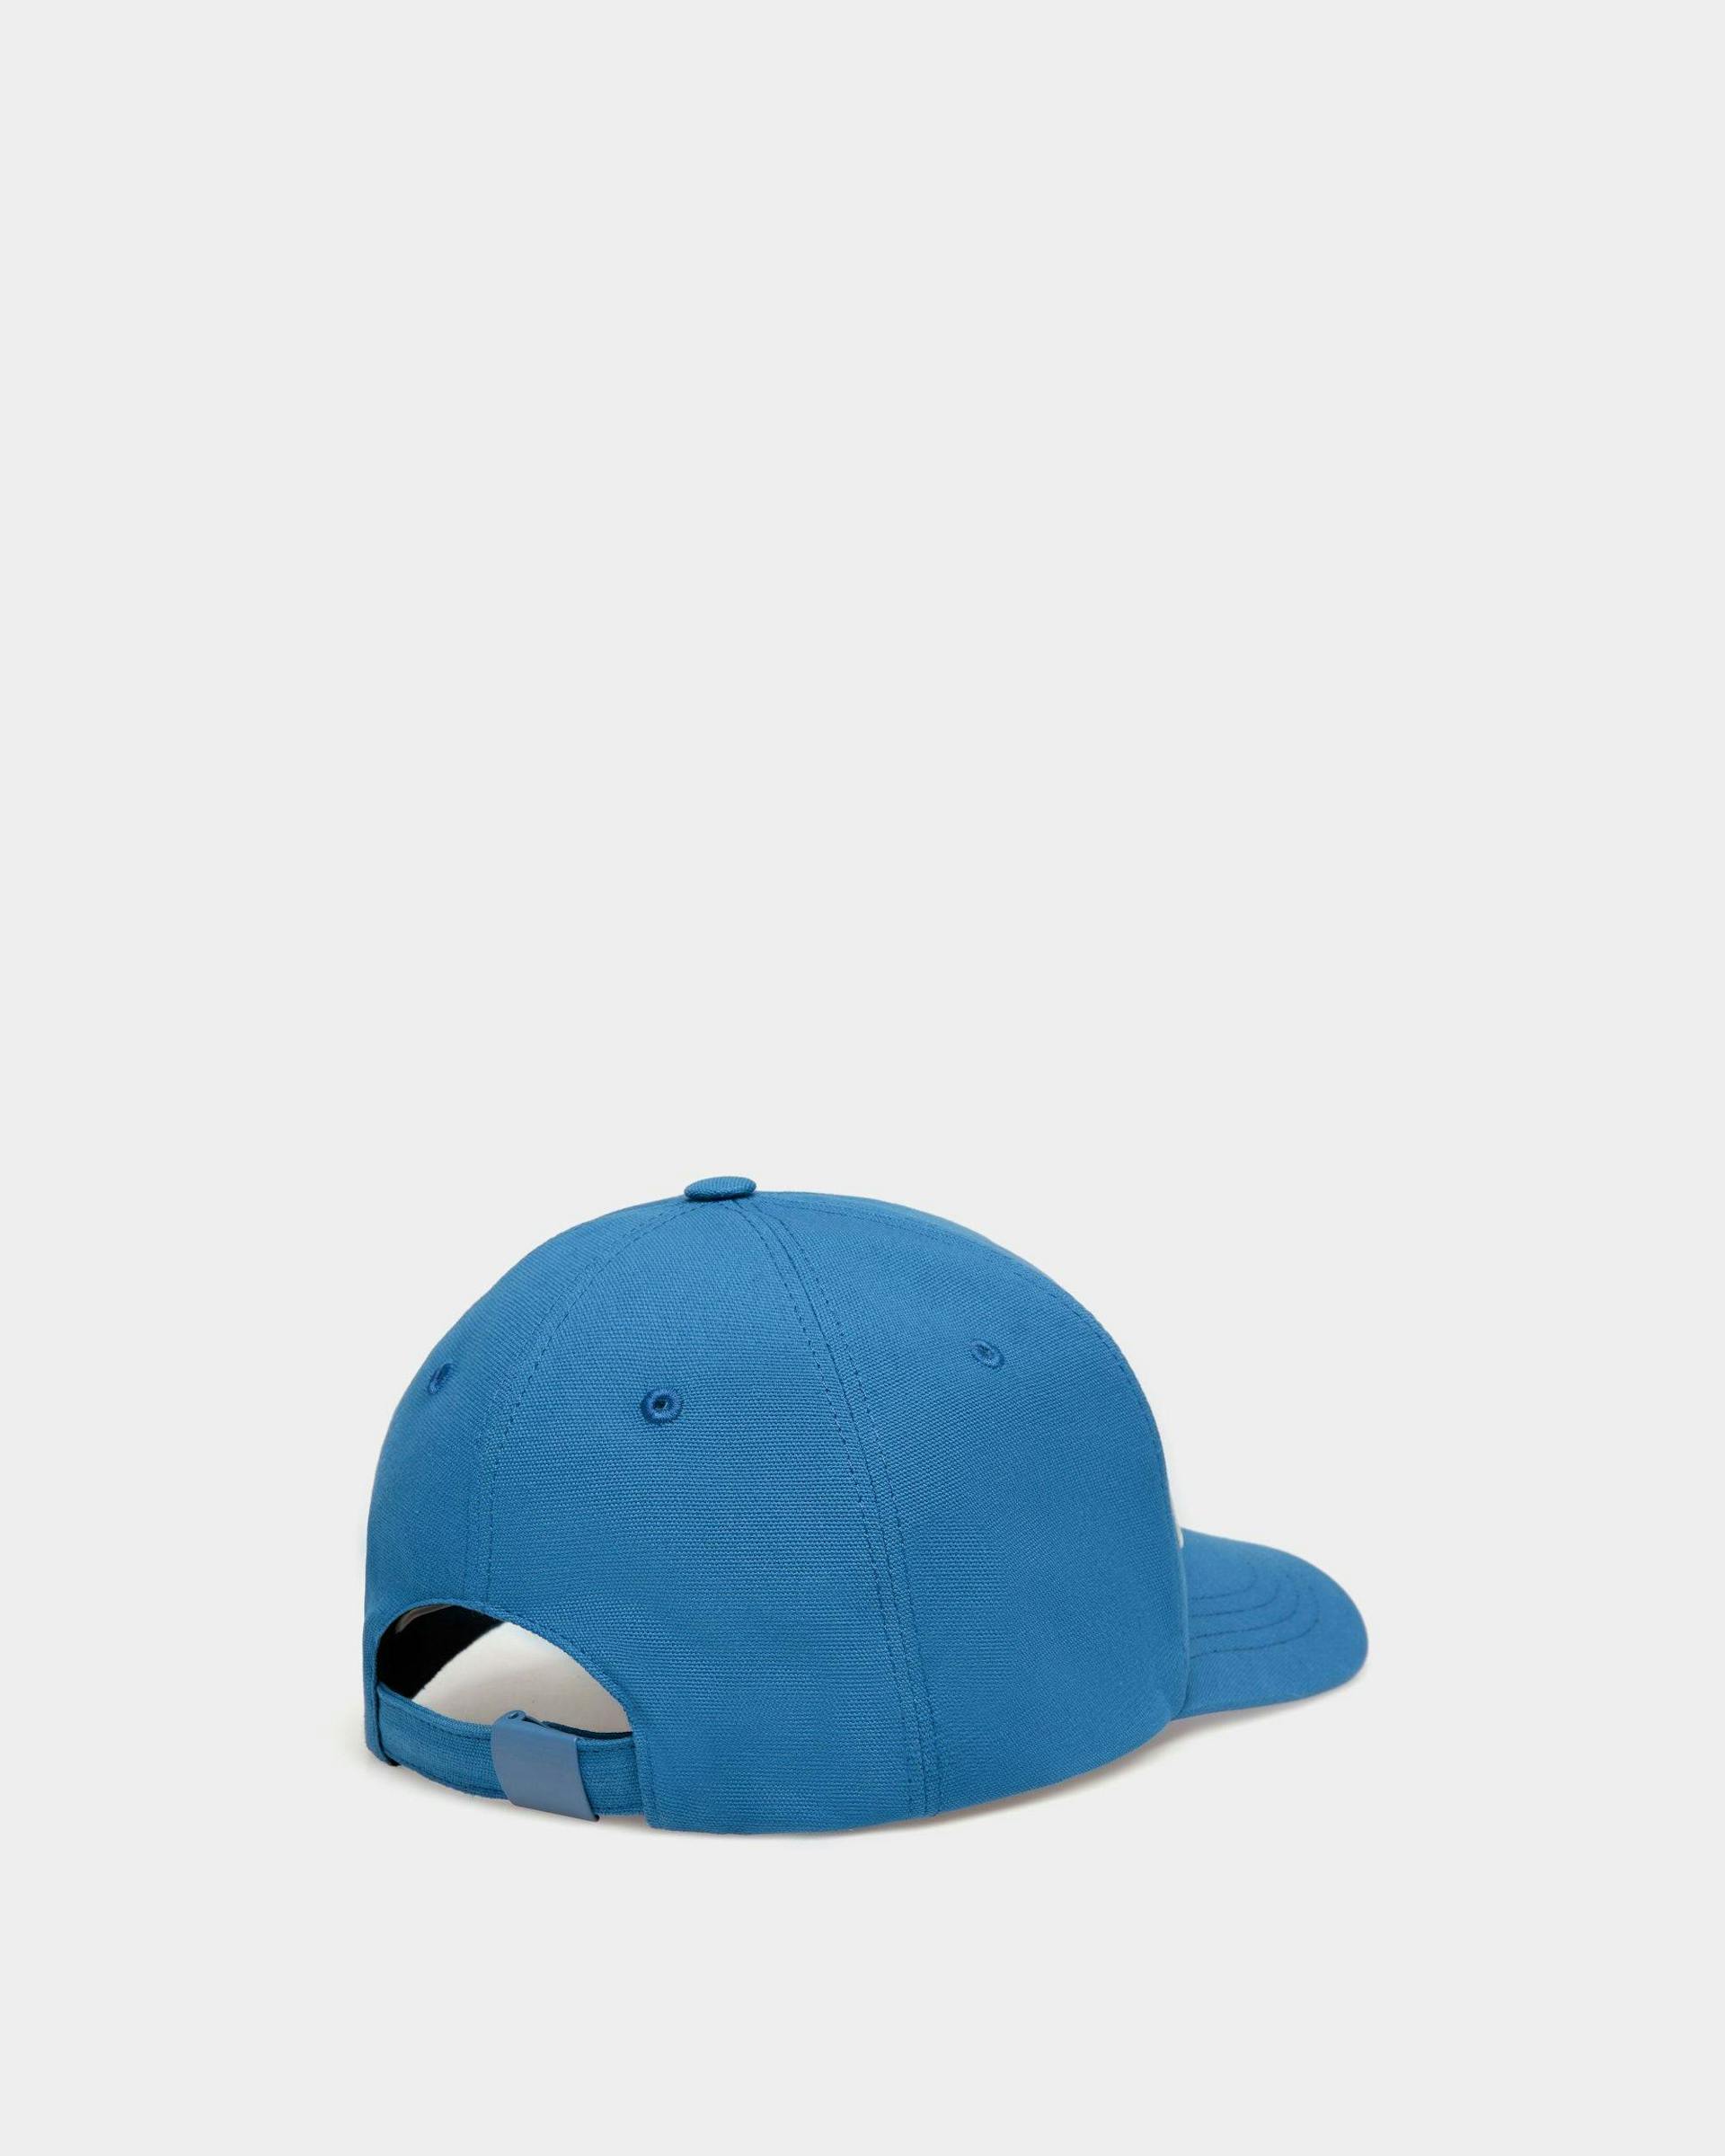 Men's Baseball Hat In Blue Cotton | Bally | Still Life 3/4 Back